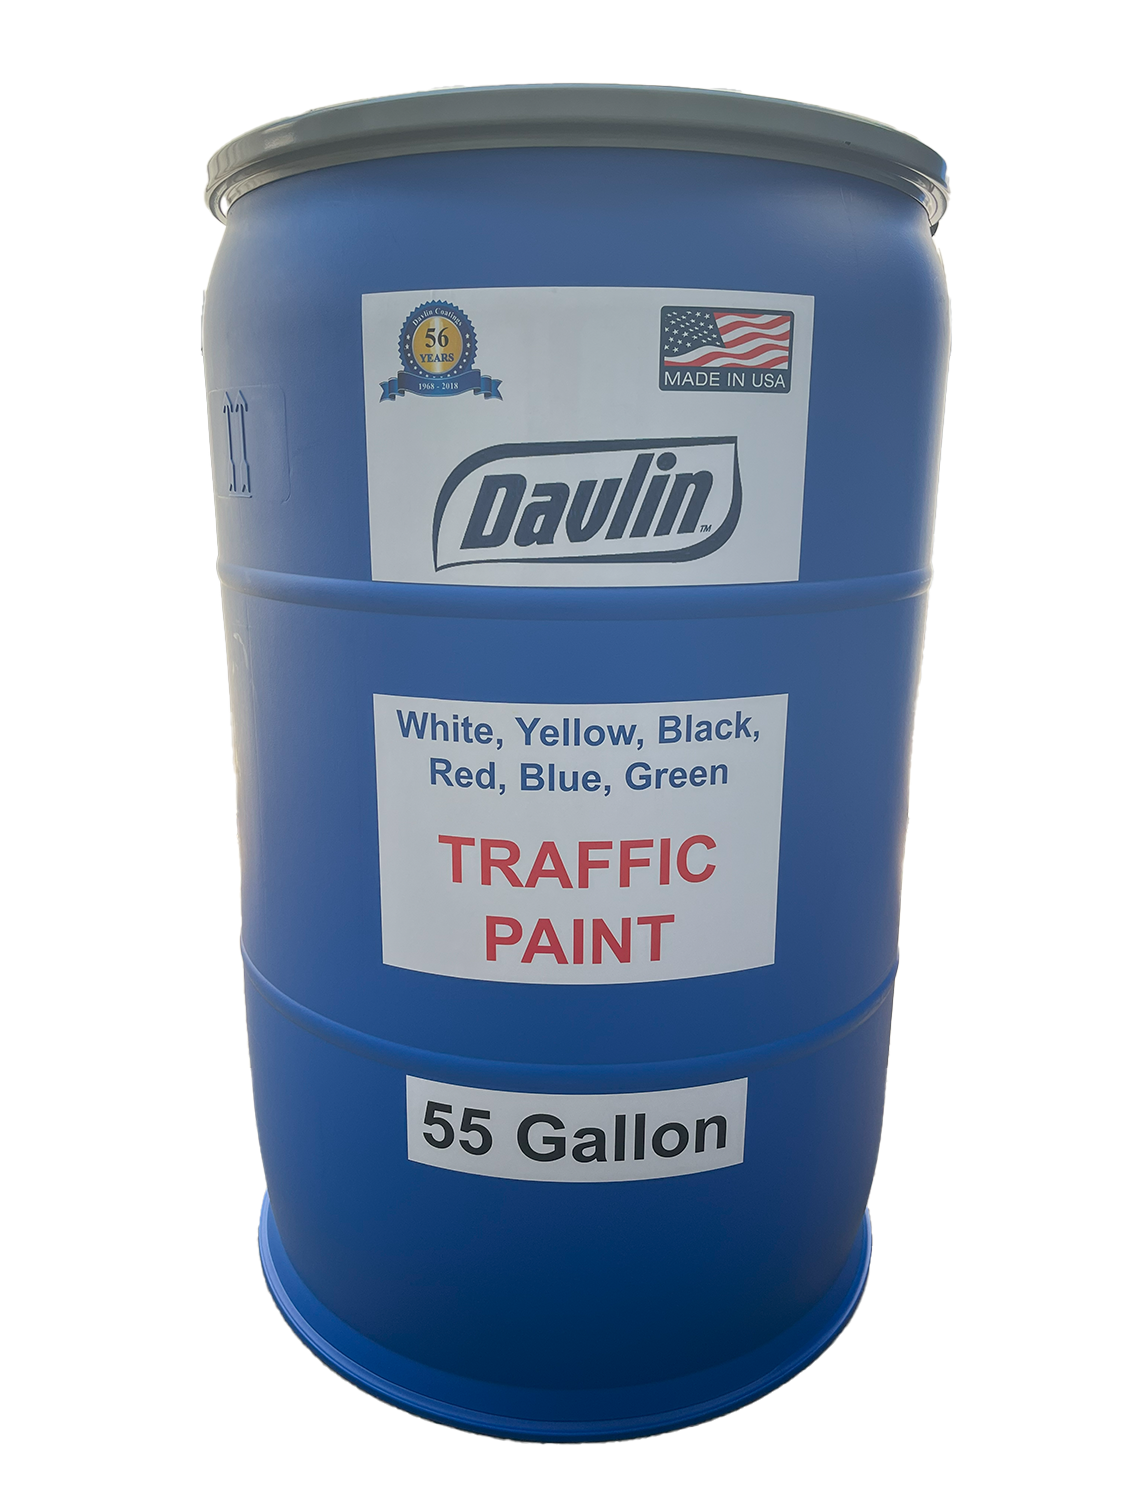 Traffic Paint In Bulk - 55 gal Drum - Free Shipping - Traffic Marking Paint - White, Yellow, Red, Black, Blue, Green